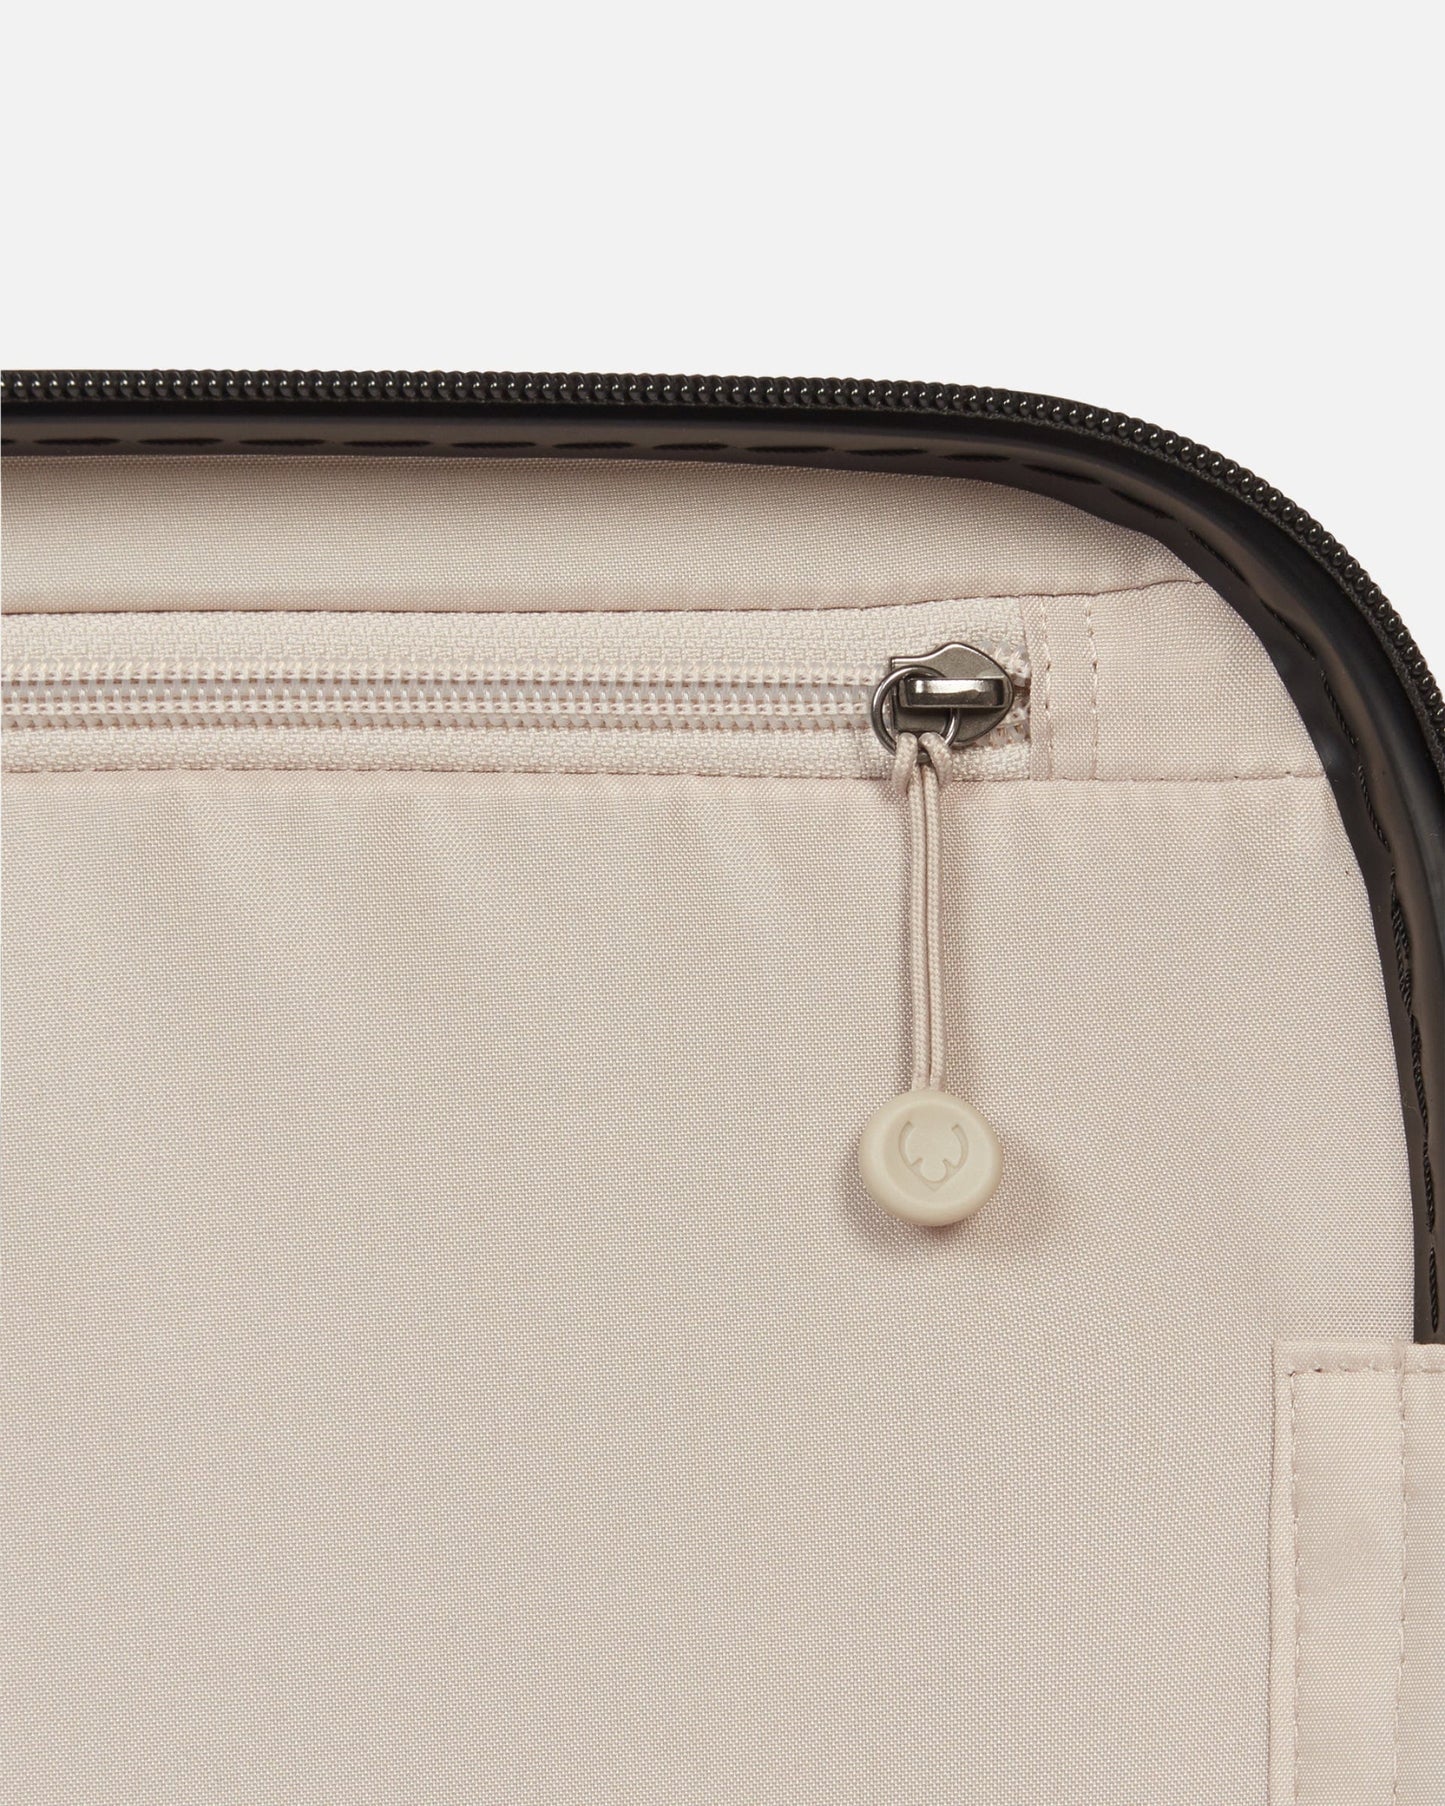 Antler UK Luggage -  Logo cabin in moss grey - Hard Suitcases Logo Cabin Suitcase Grey | Lightweight Hard Shell Luggage